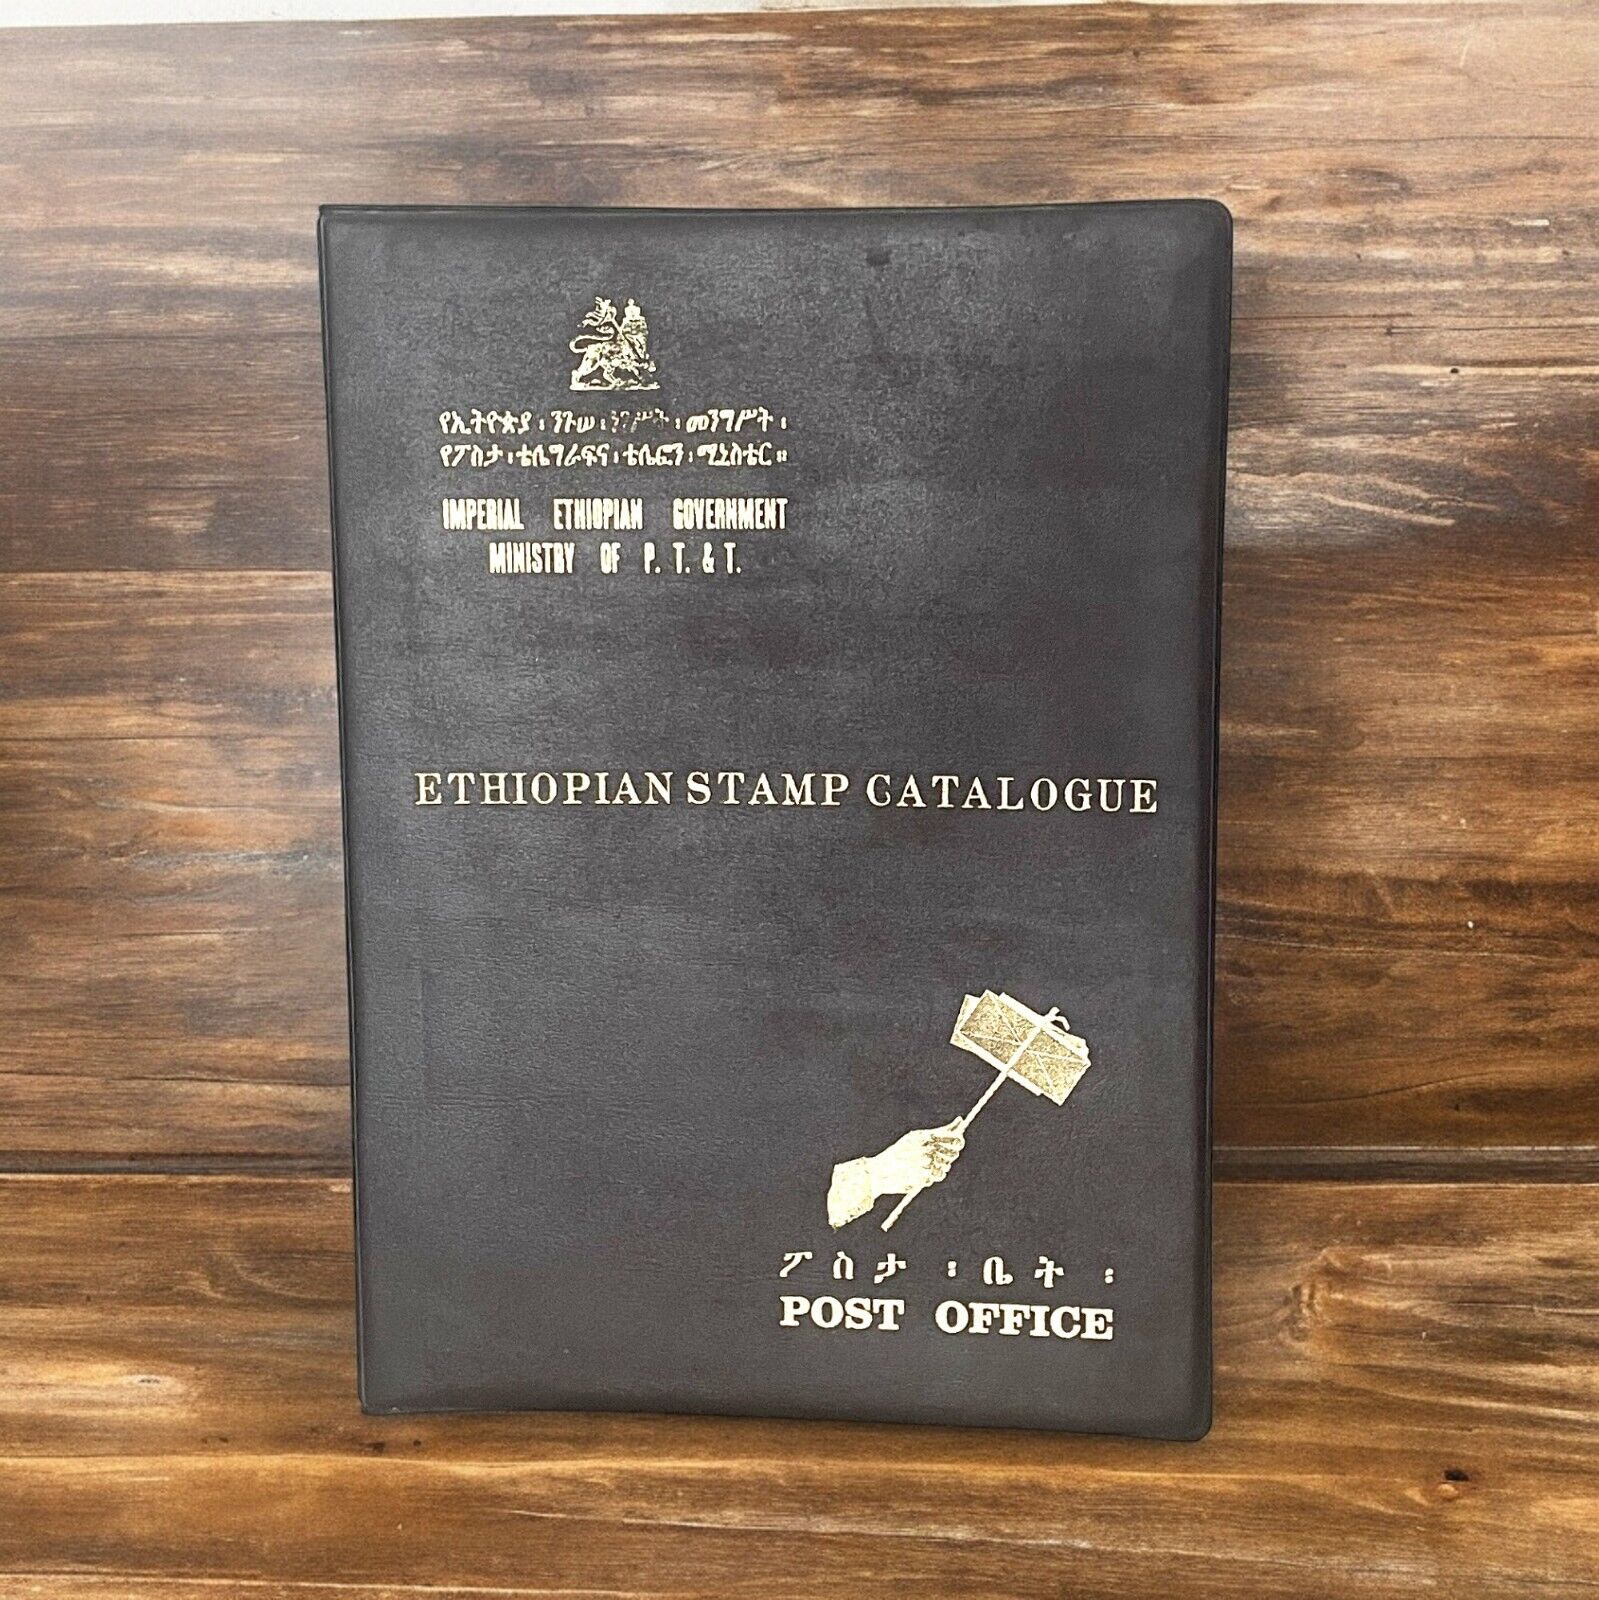 Ethiopian Emperor Haile Selassie stamp catalogue. 331 pages 1971 Comprehensive